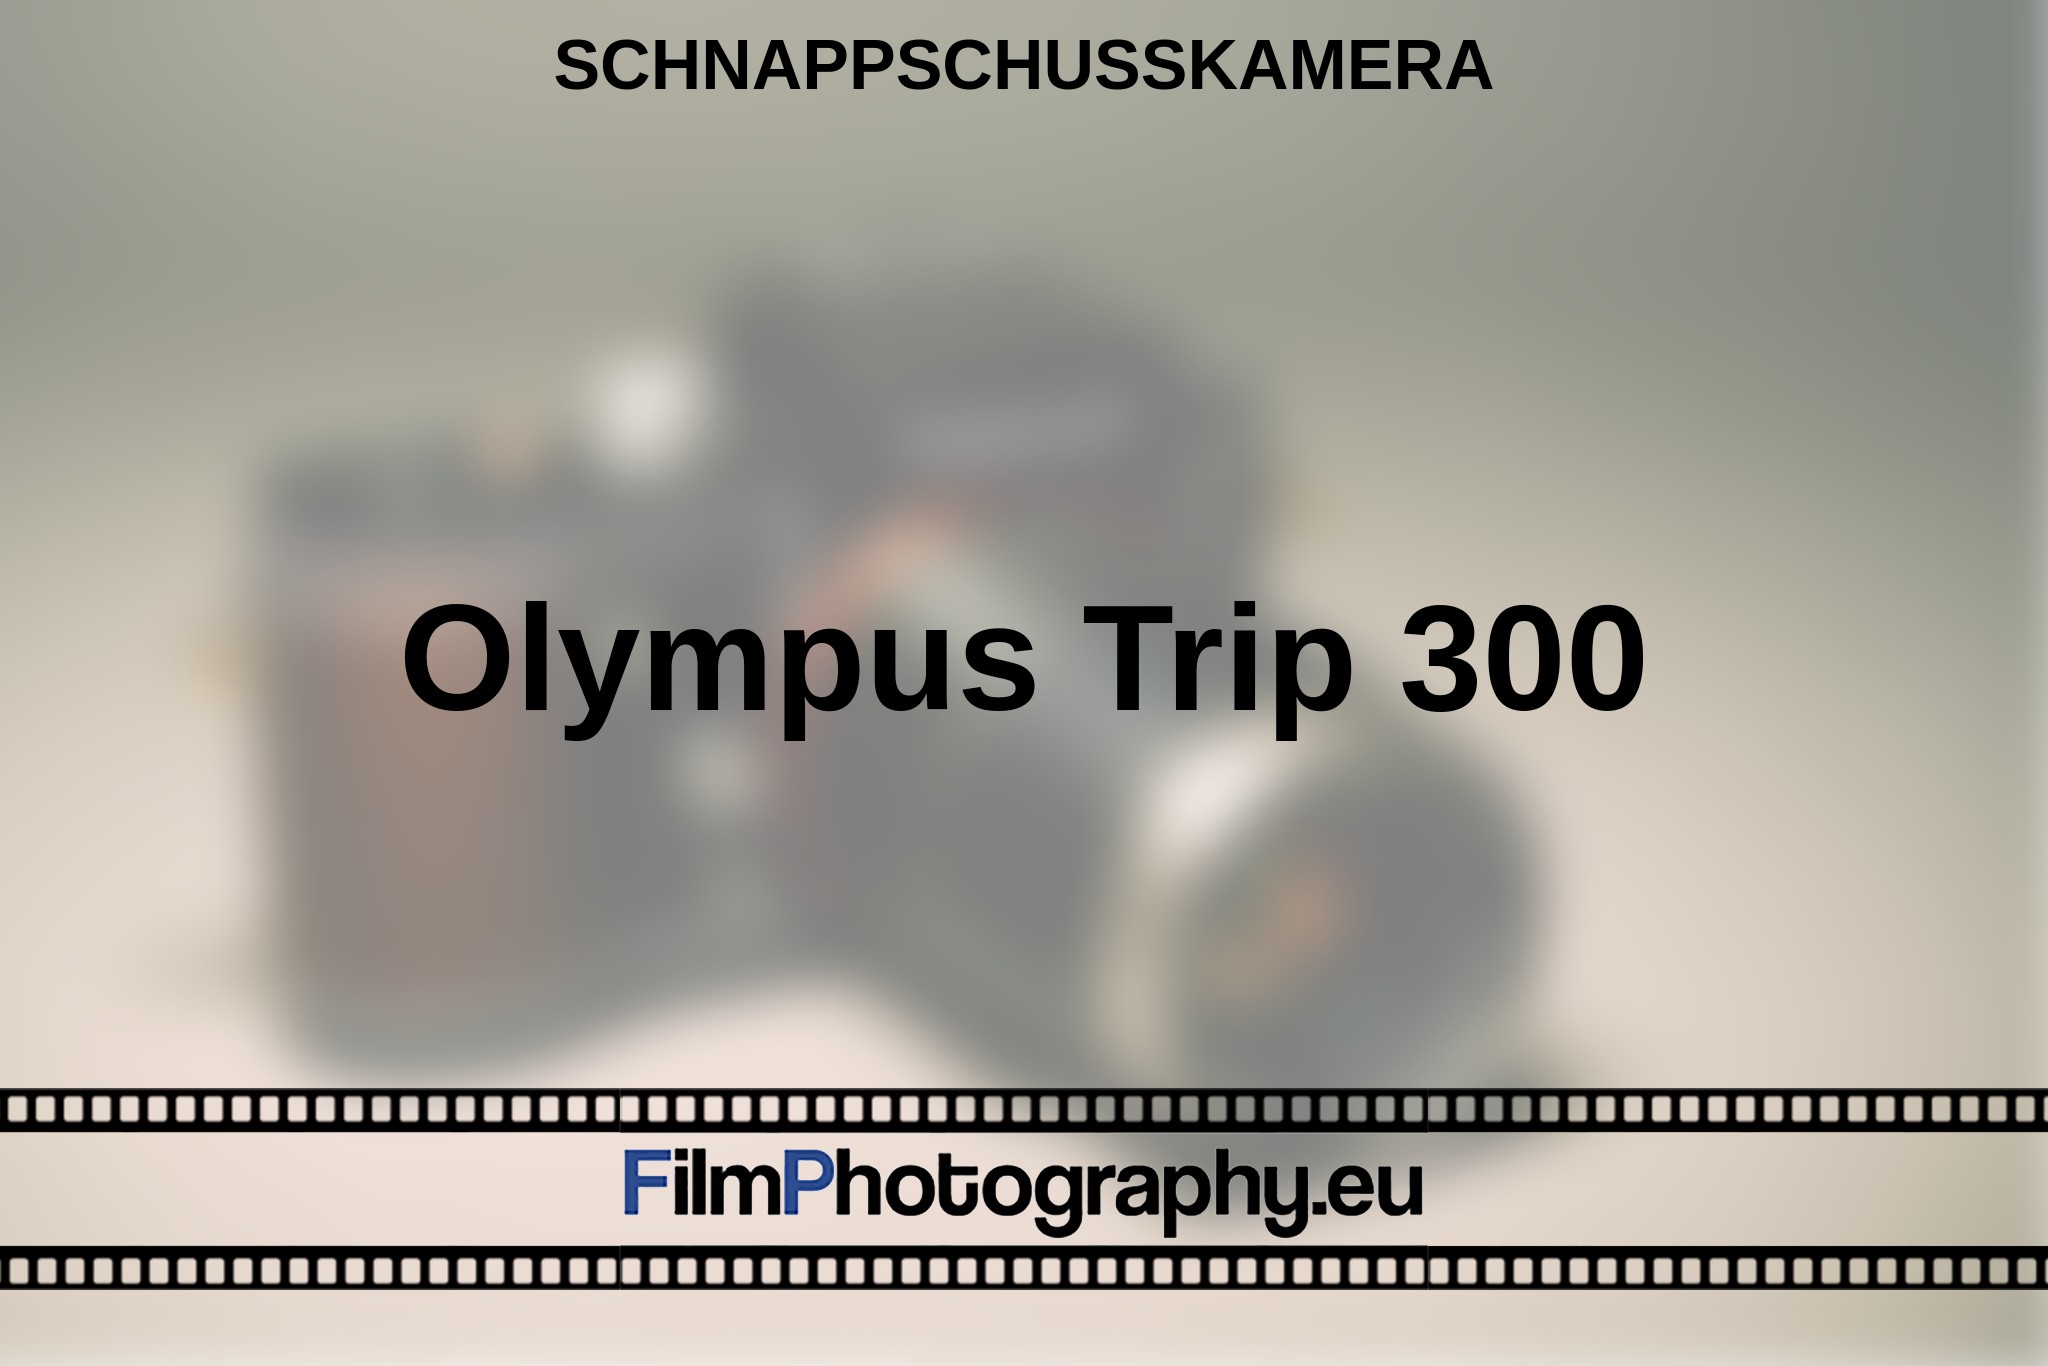 olympus-trip-300-schnappschusskamera-bnv.jpg